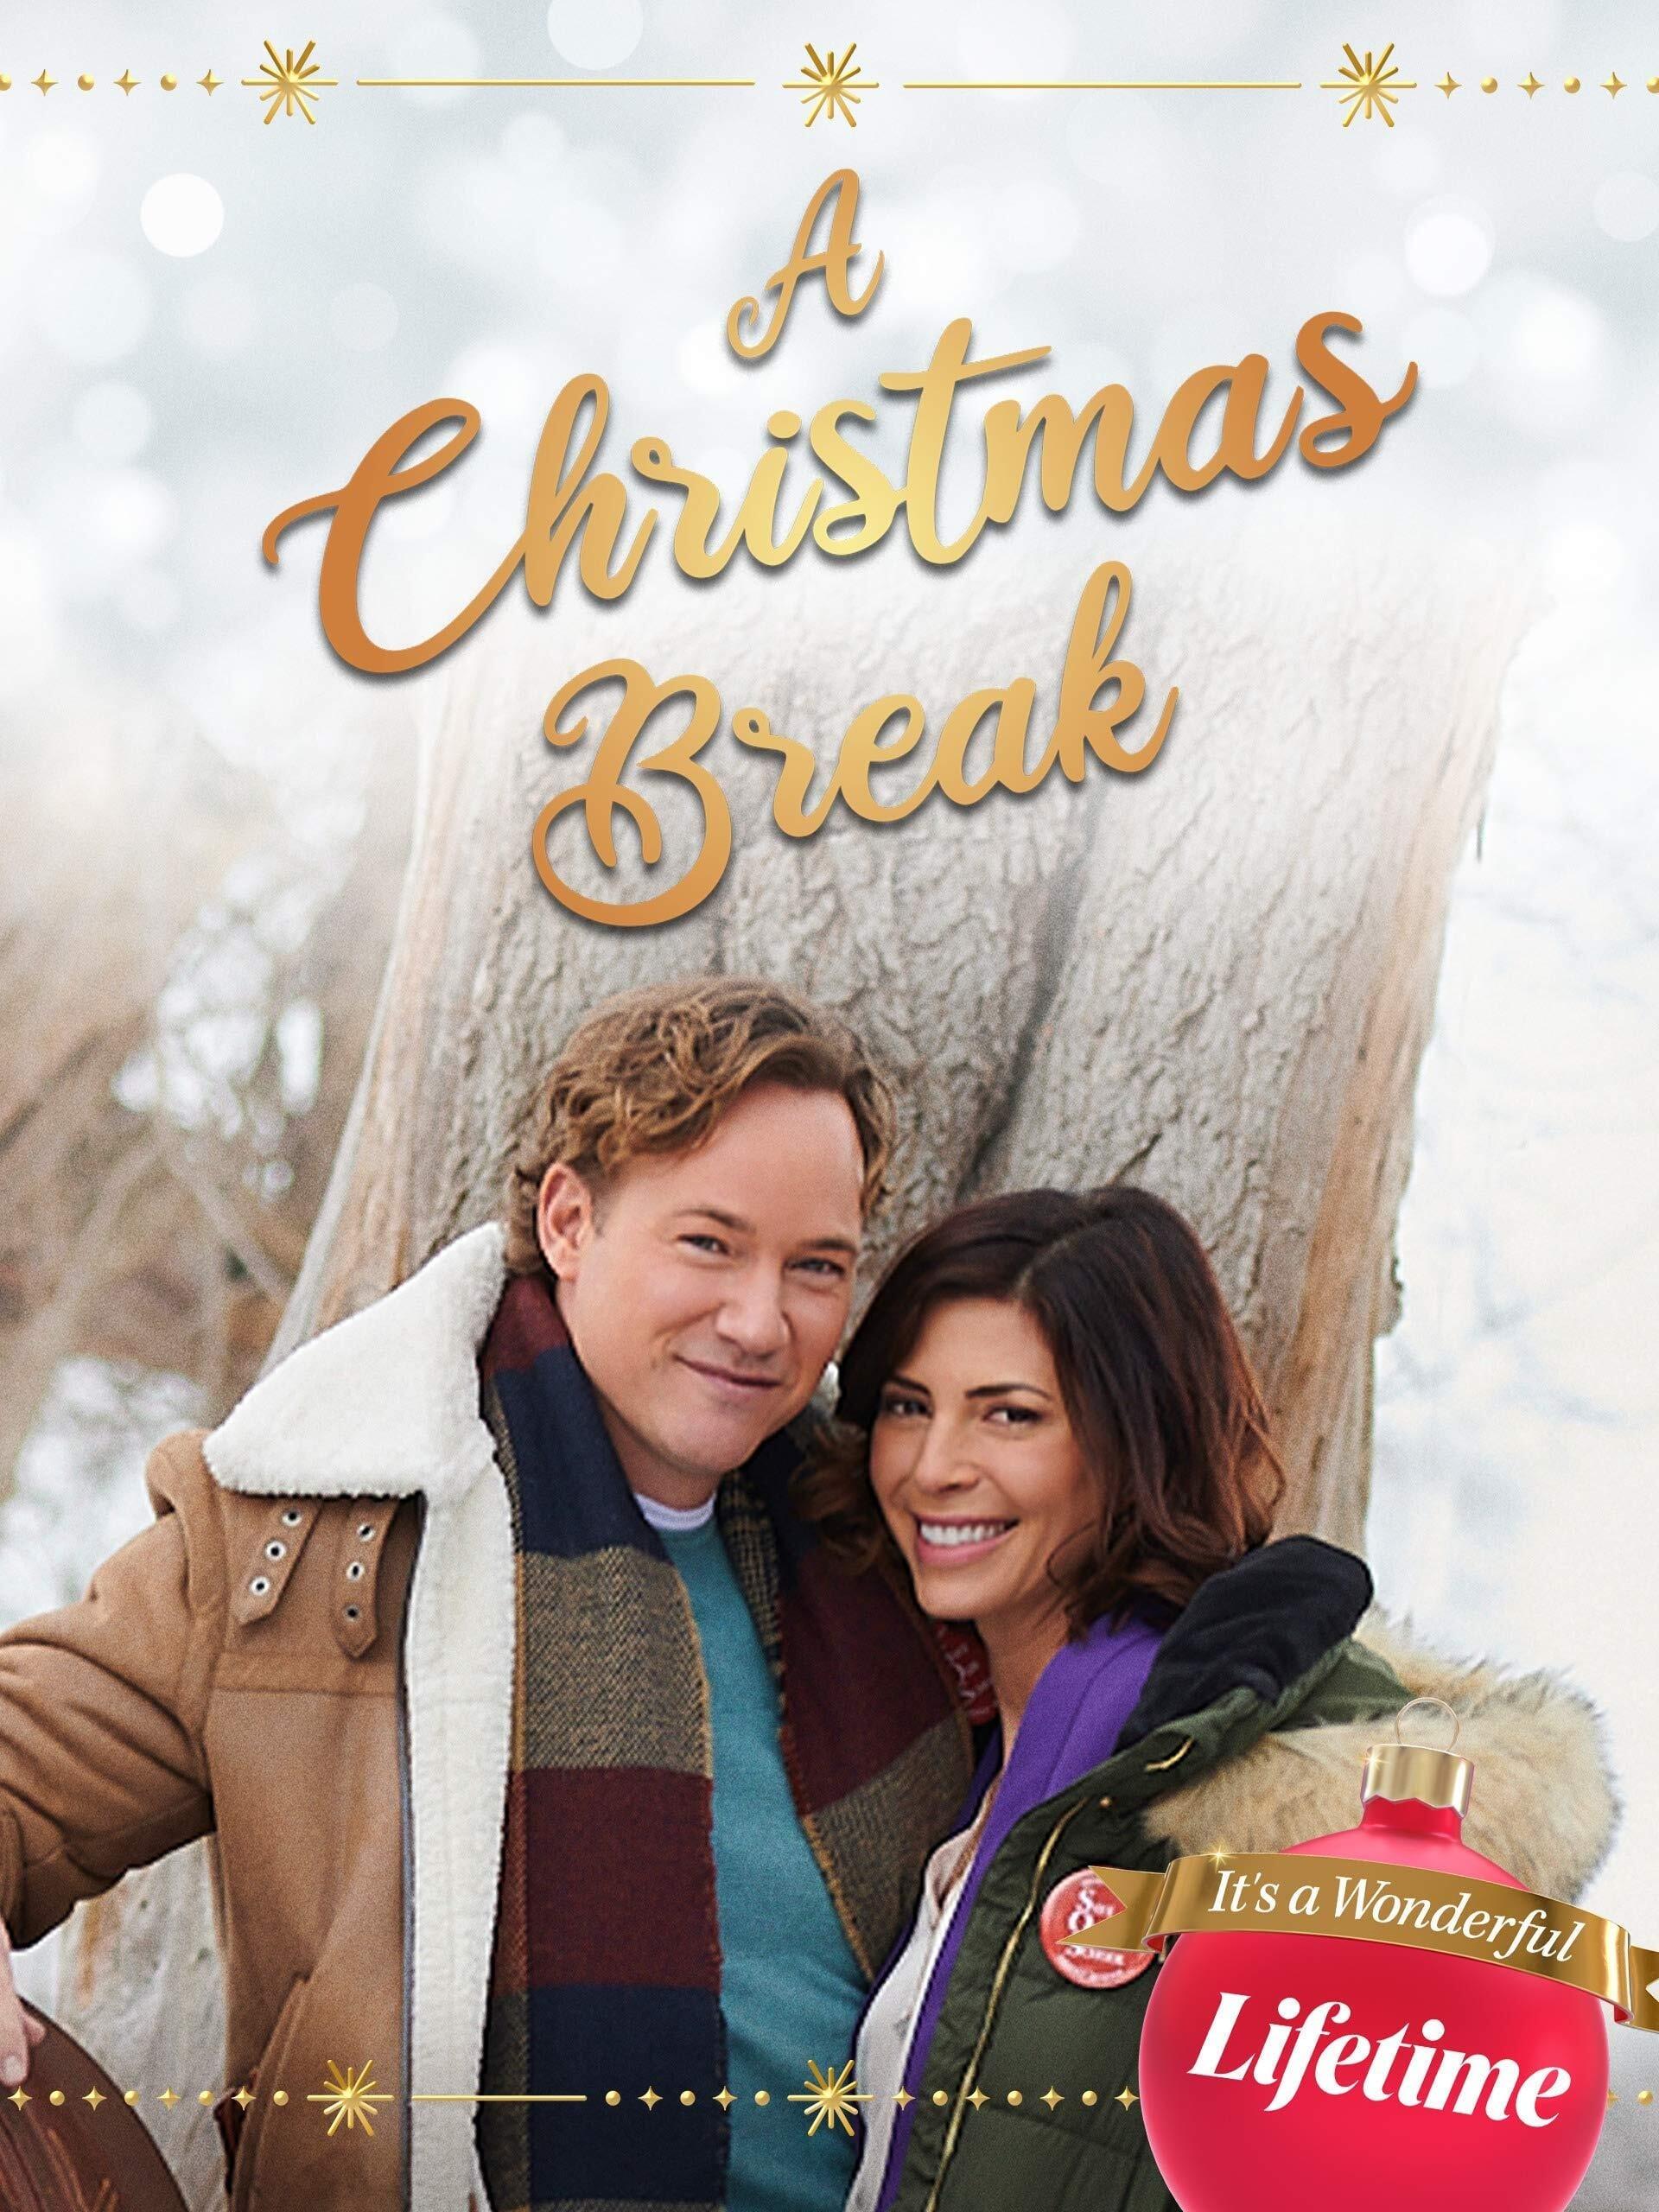 A Christmas Break poster